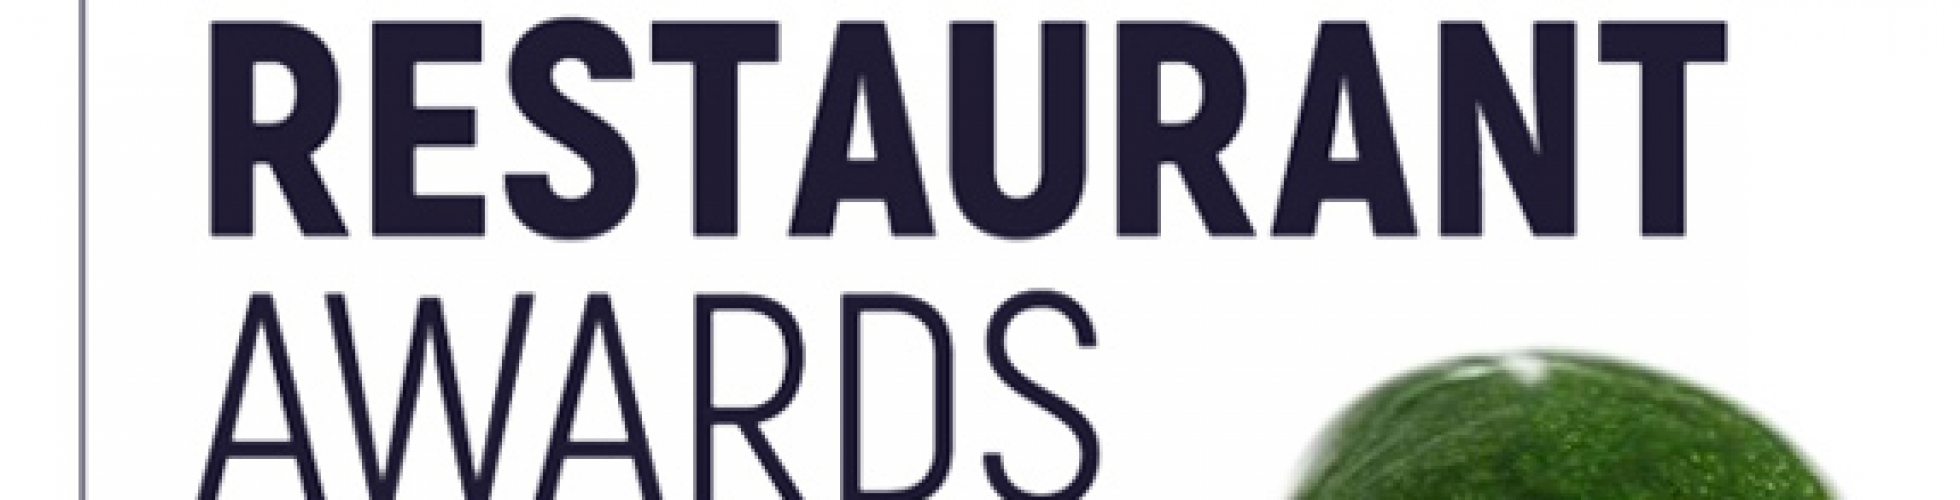 The National Restaurant Awards 2017 plancton